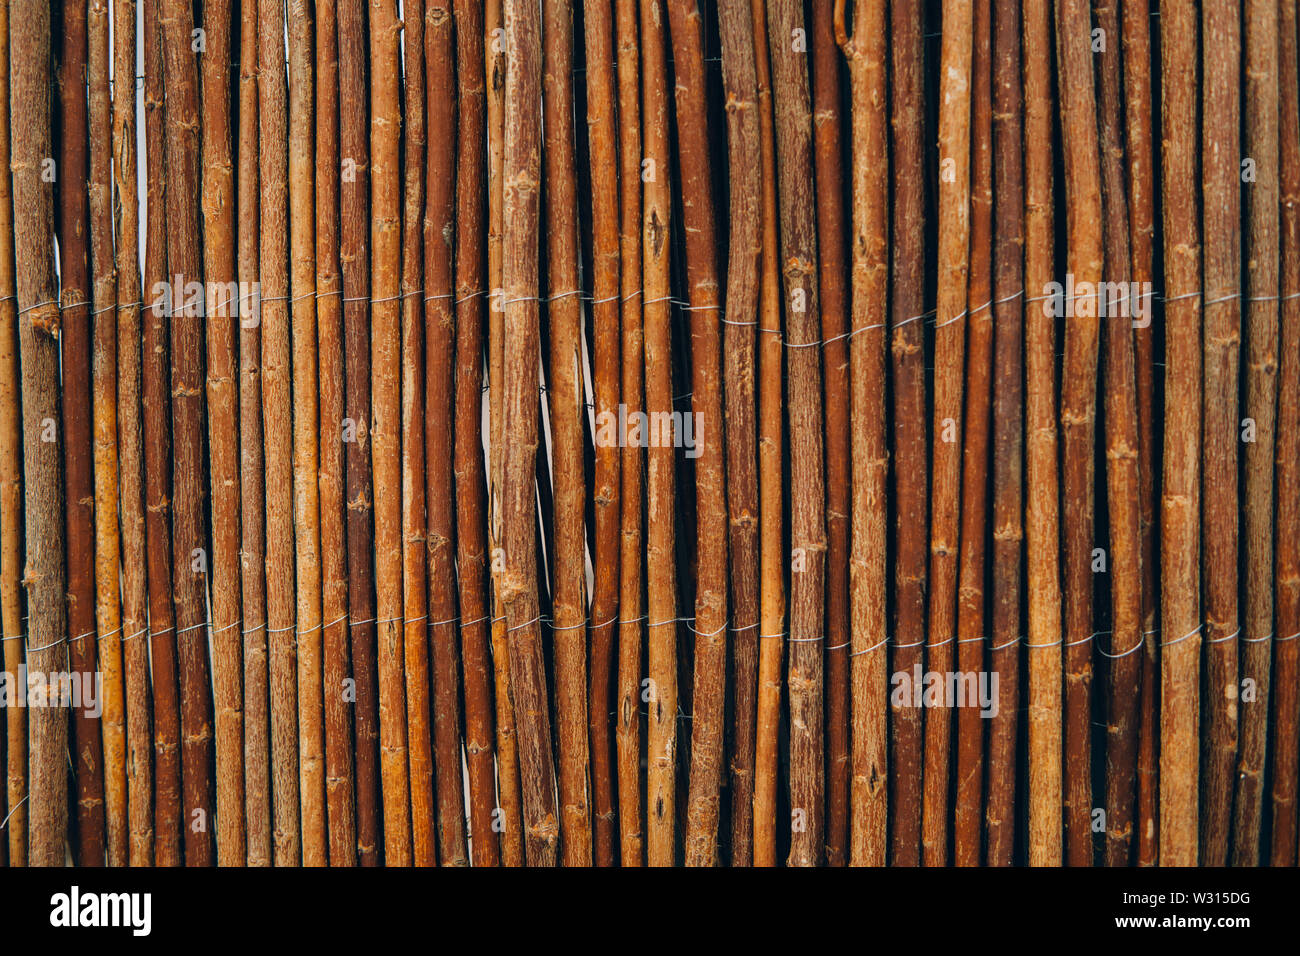 Background of wooden sticks. Close up image. Stock Photo